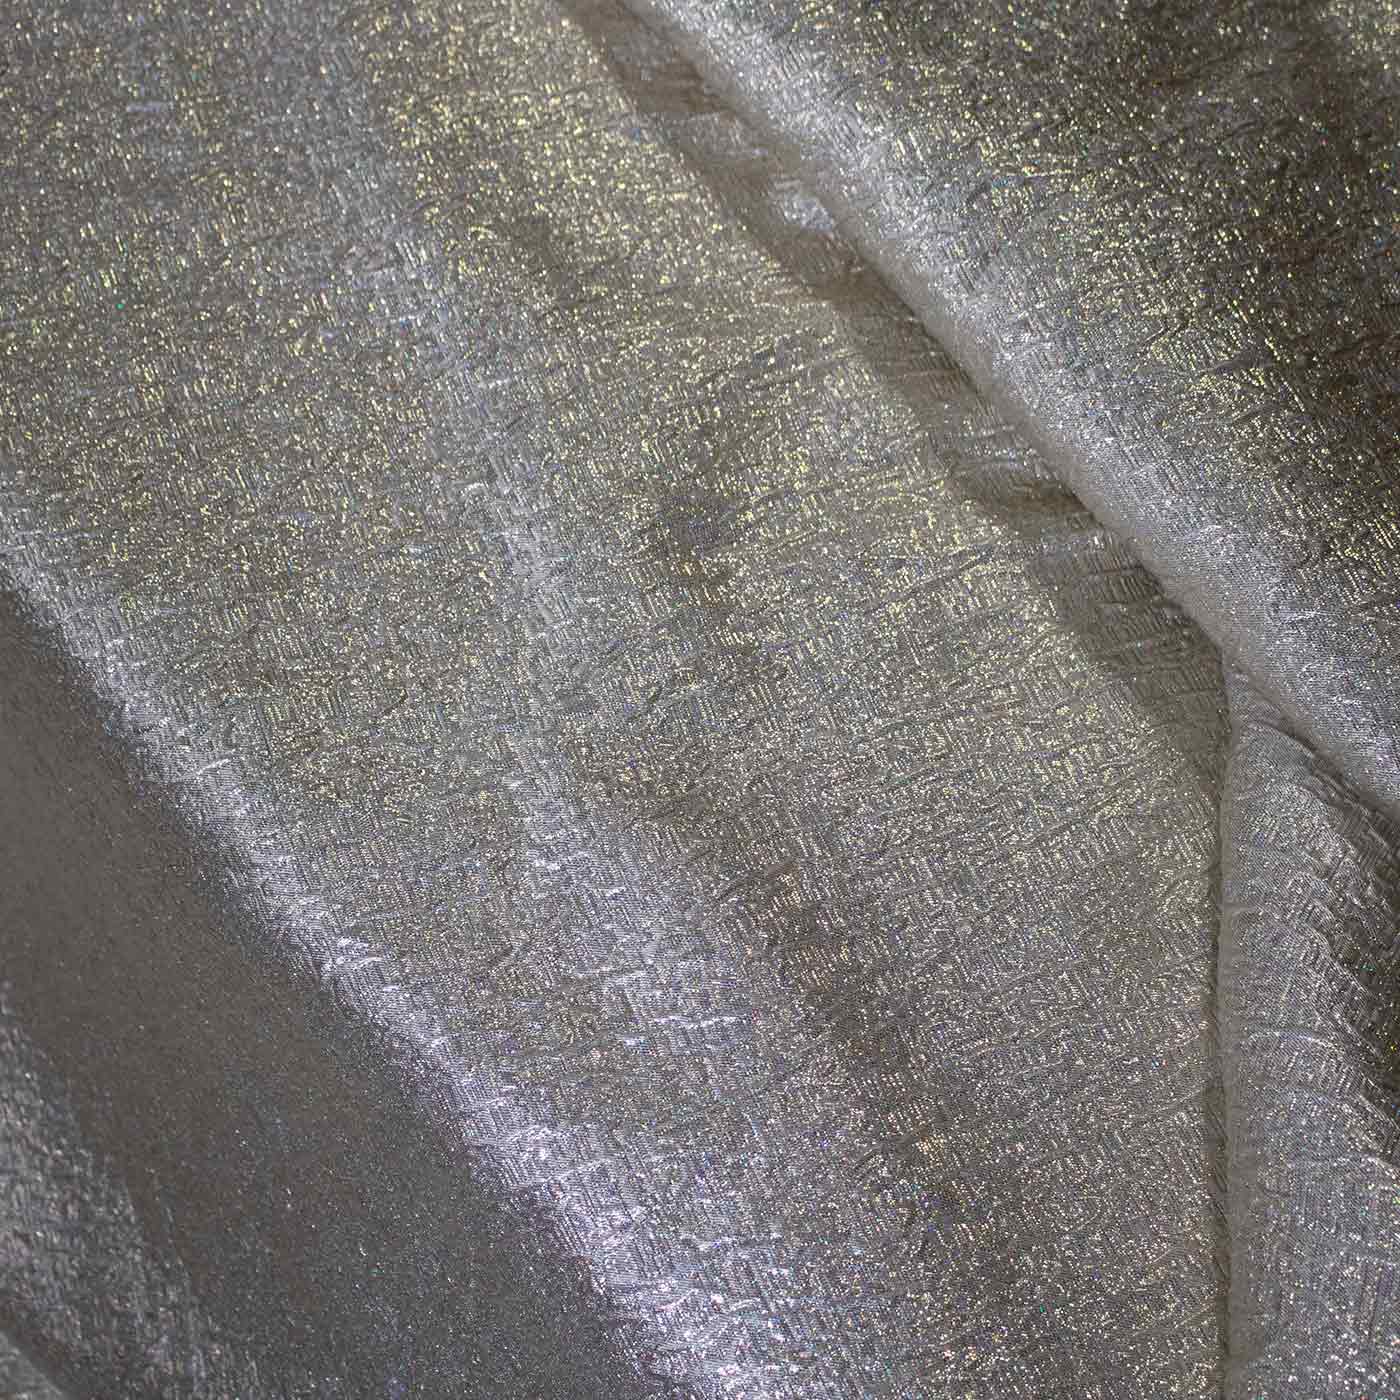 cream italian iridescent brocade fabric